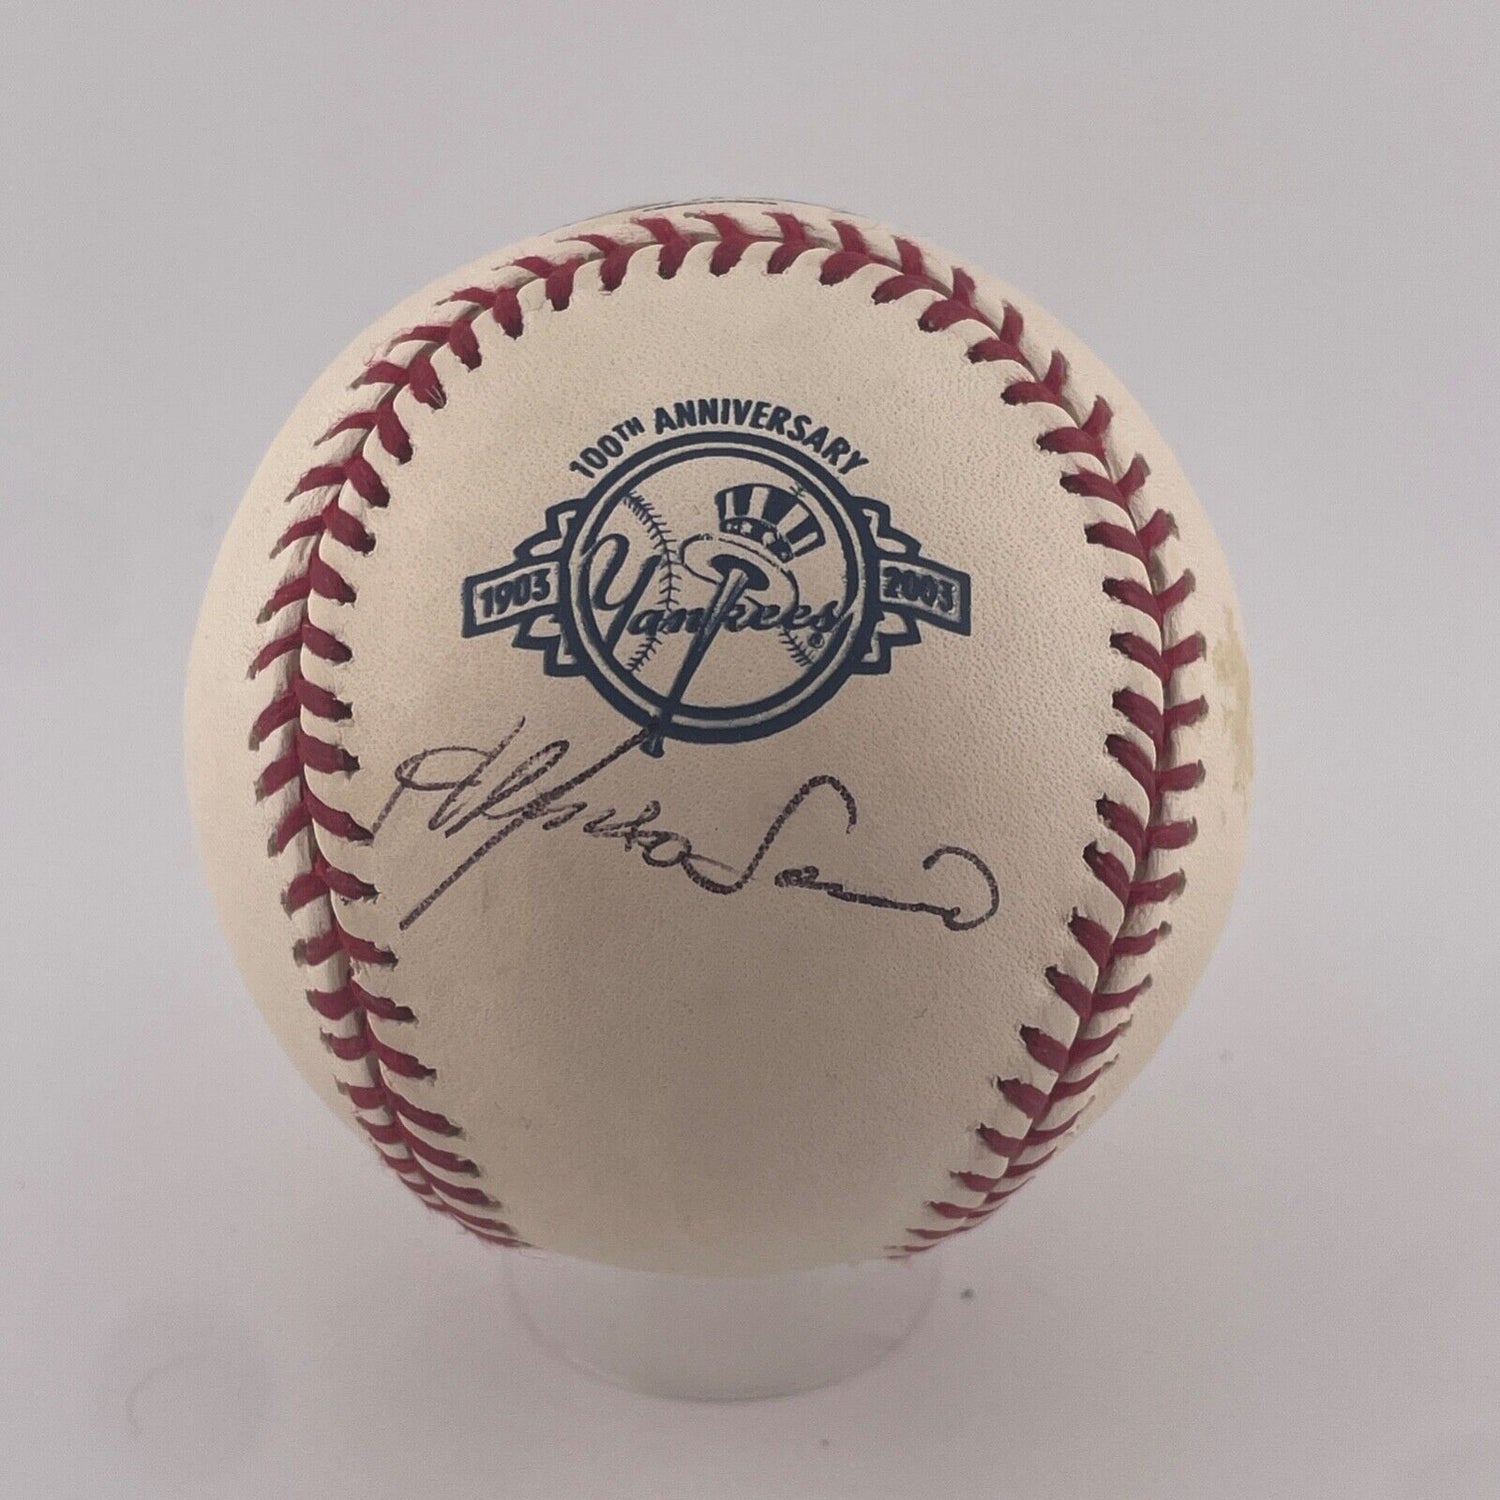 Alfonso Soriano Signed Baseball. NY Yankees. JSA